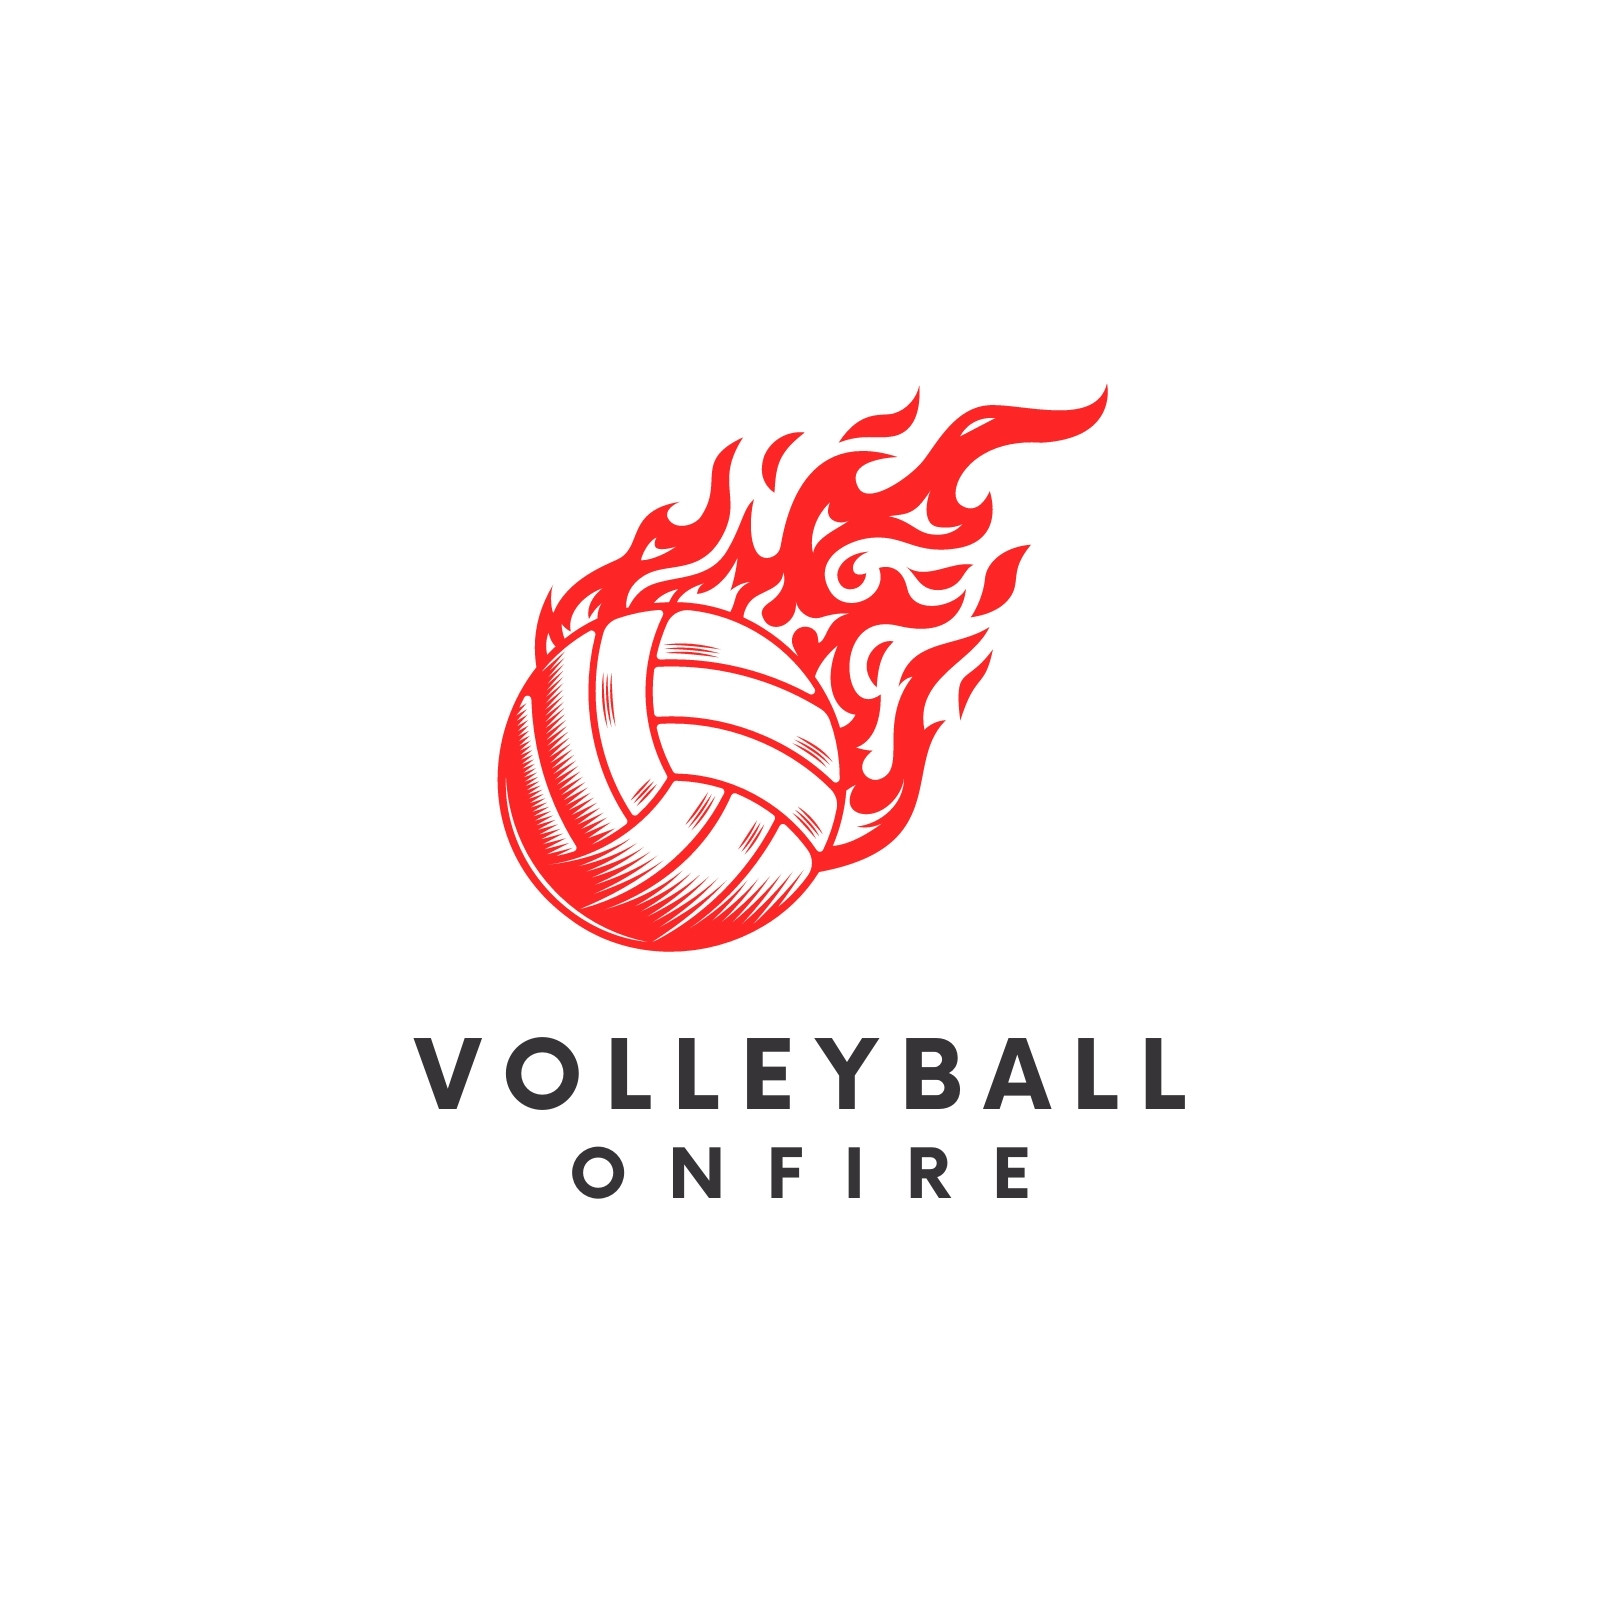 sportsfest logo design